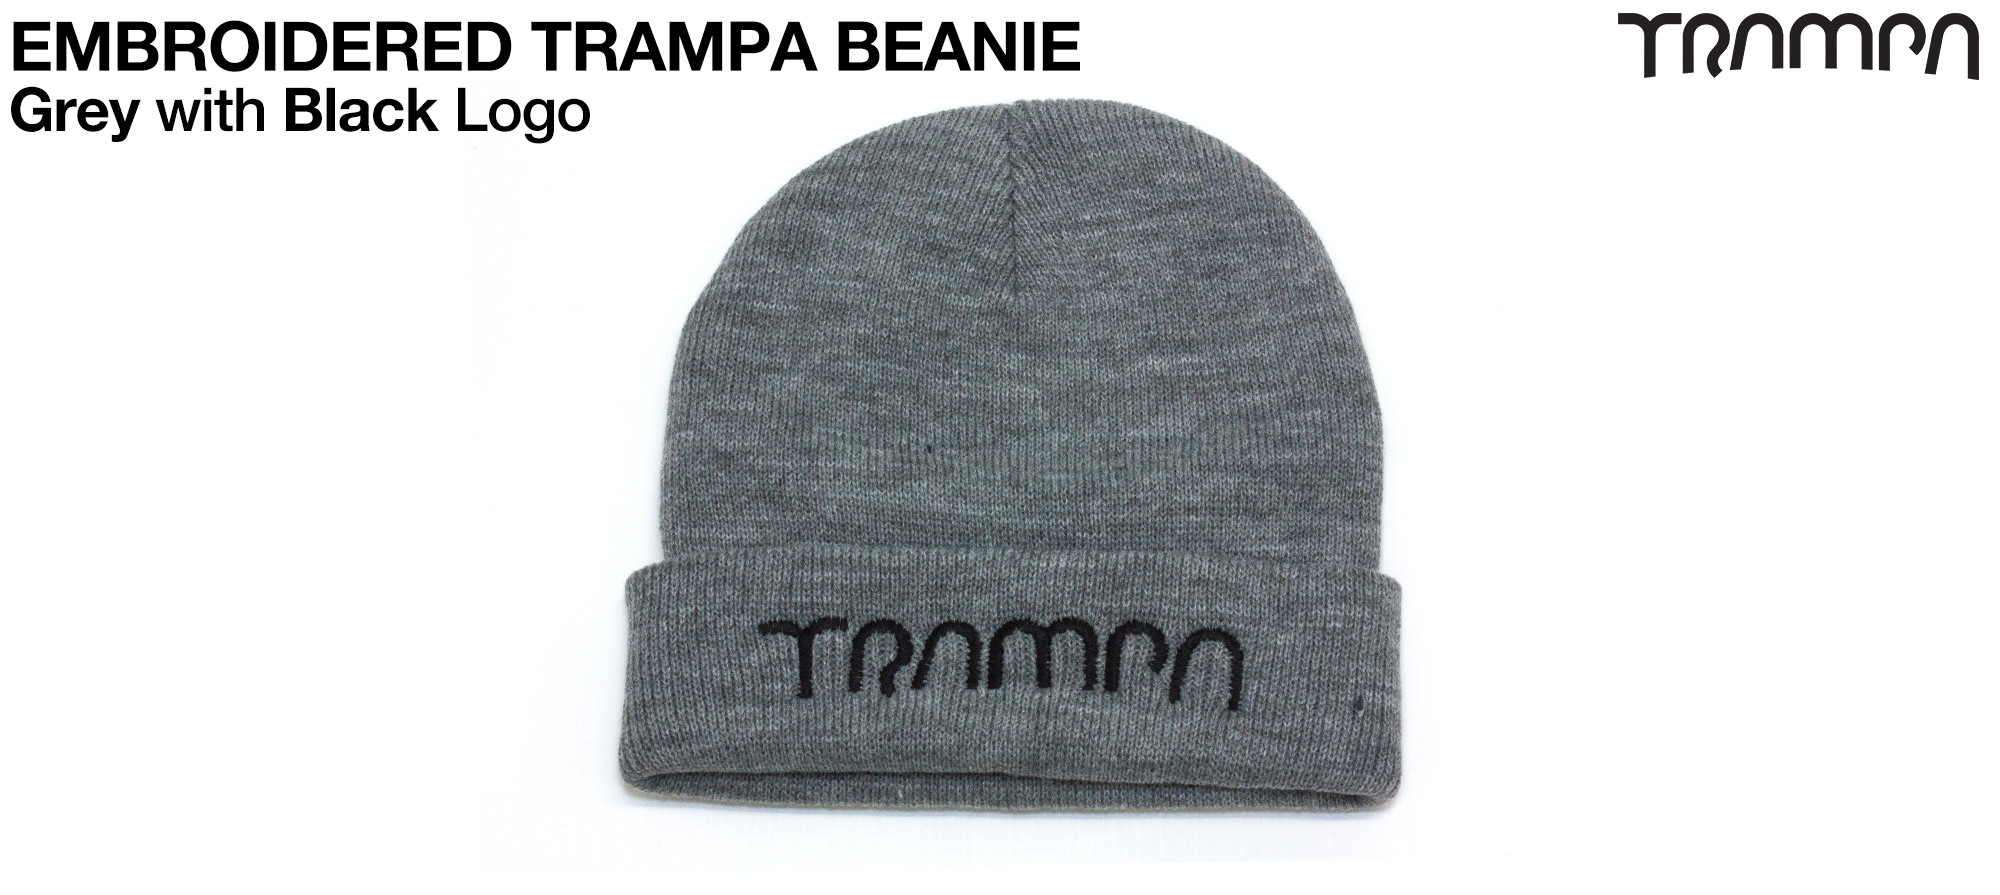 Marl GREY Beanie with Black TRAMPA logo (£12.50)